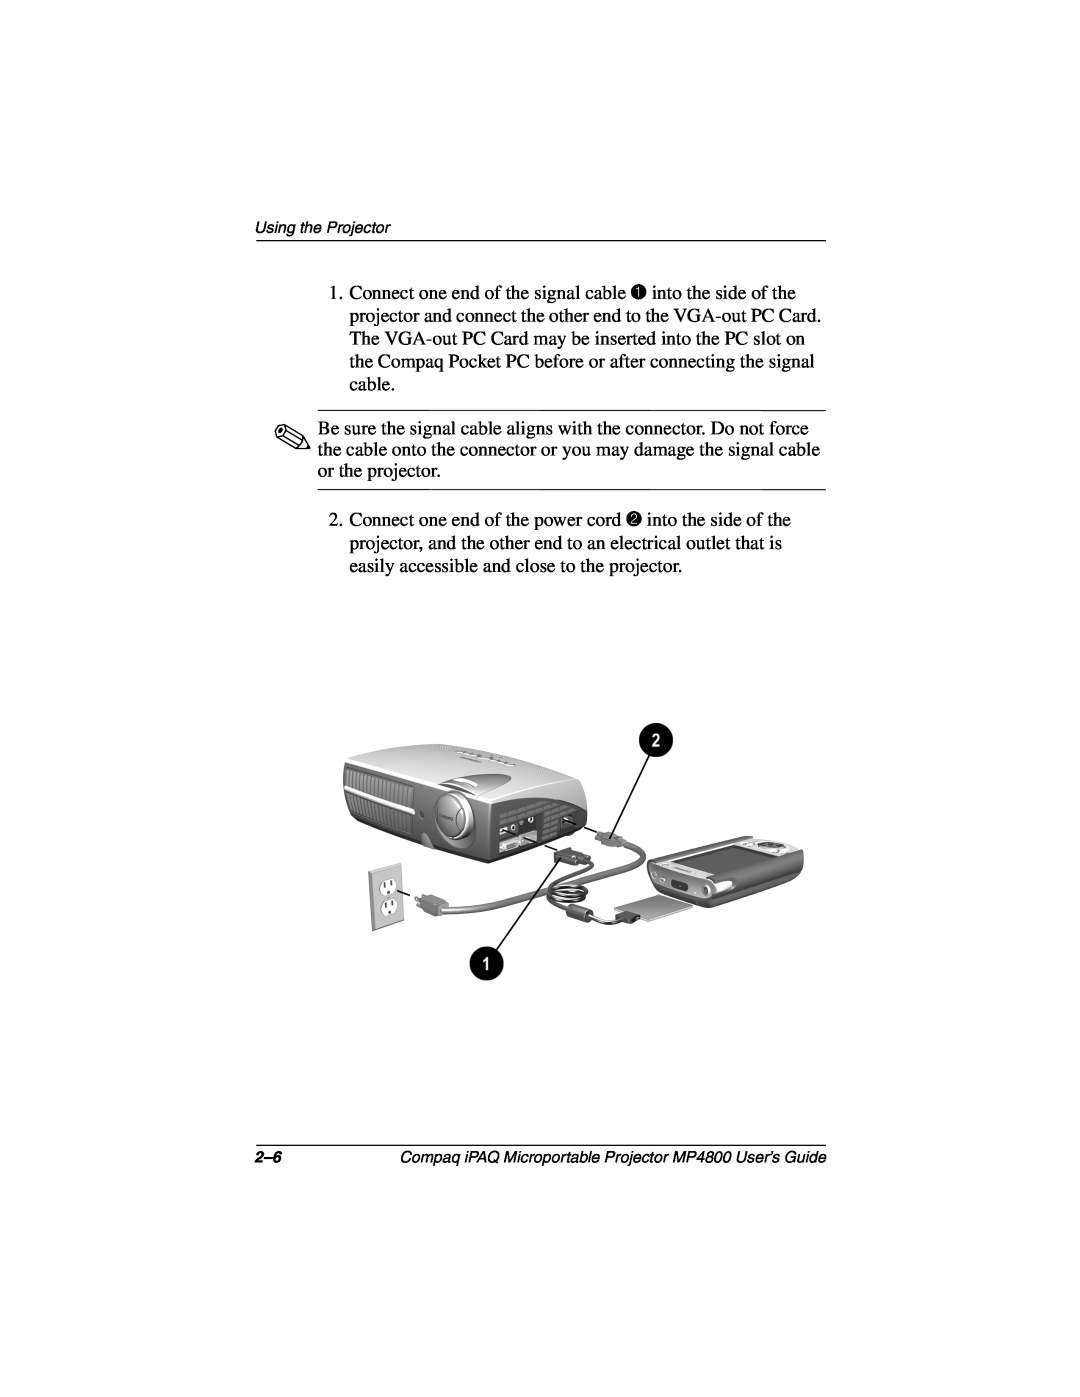 Compaq manual Using the Projector, Compaq iPAQ Microportable Projector MP4800 User’s Guide 